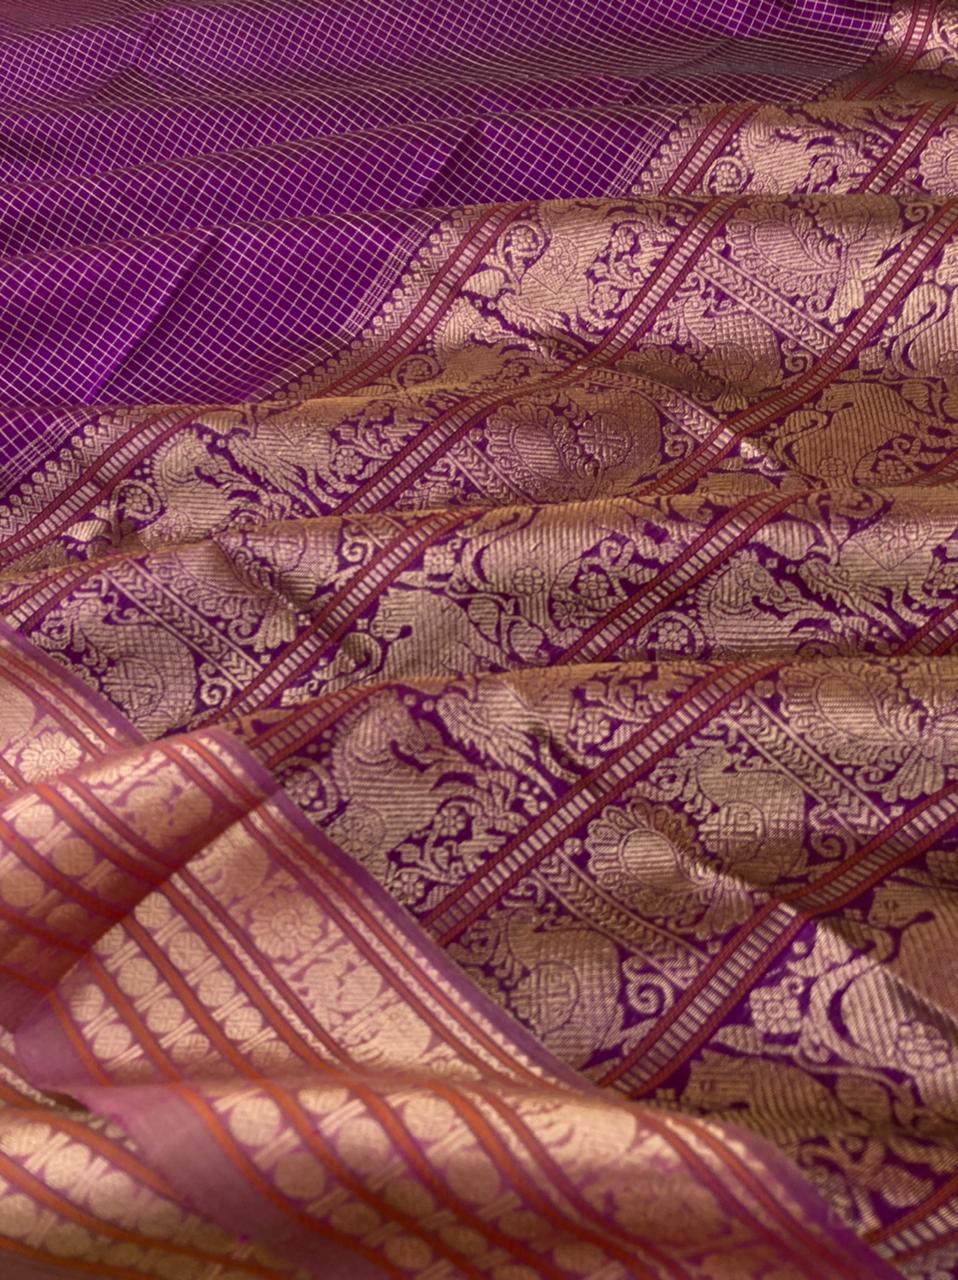 Zari Kissed Silk Cotton - deep dark purple gorgeous grand intricate zari kattam